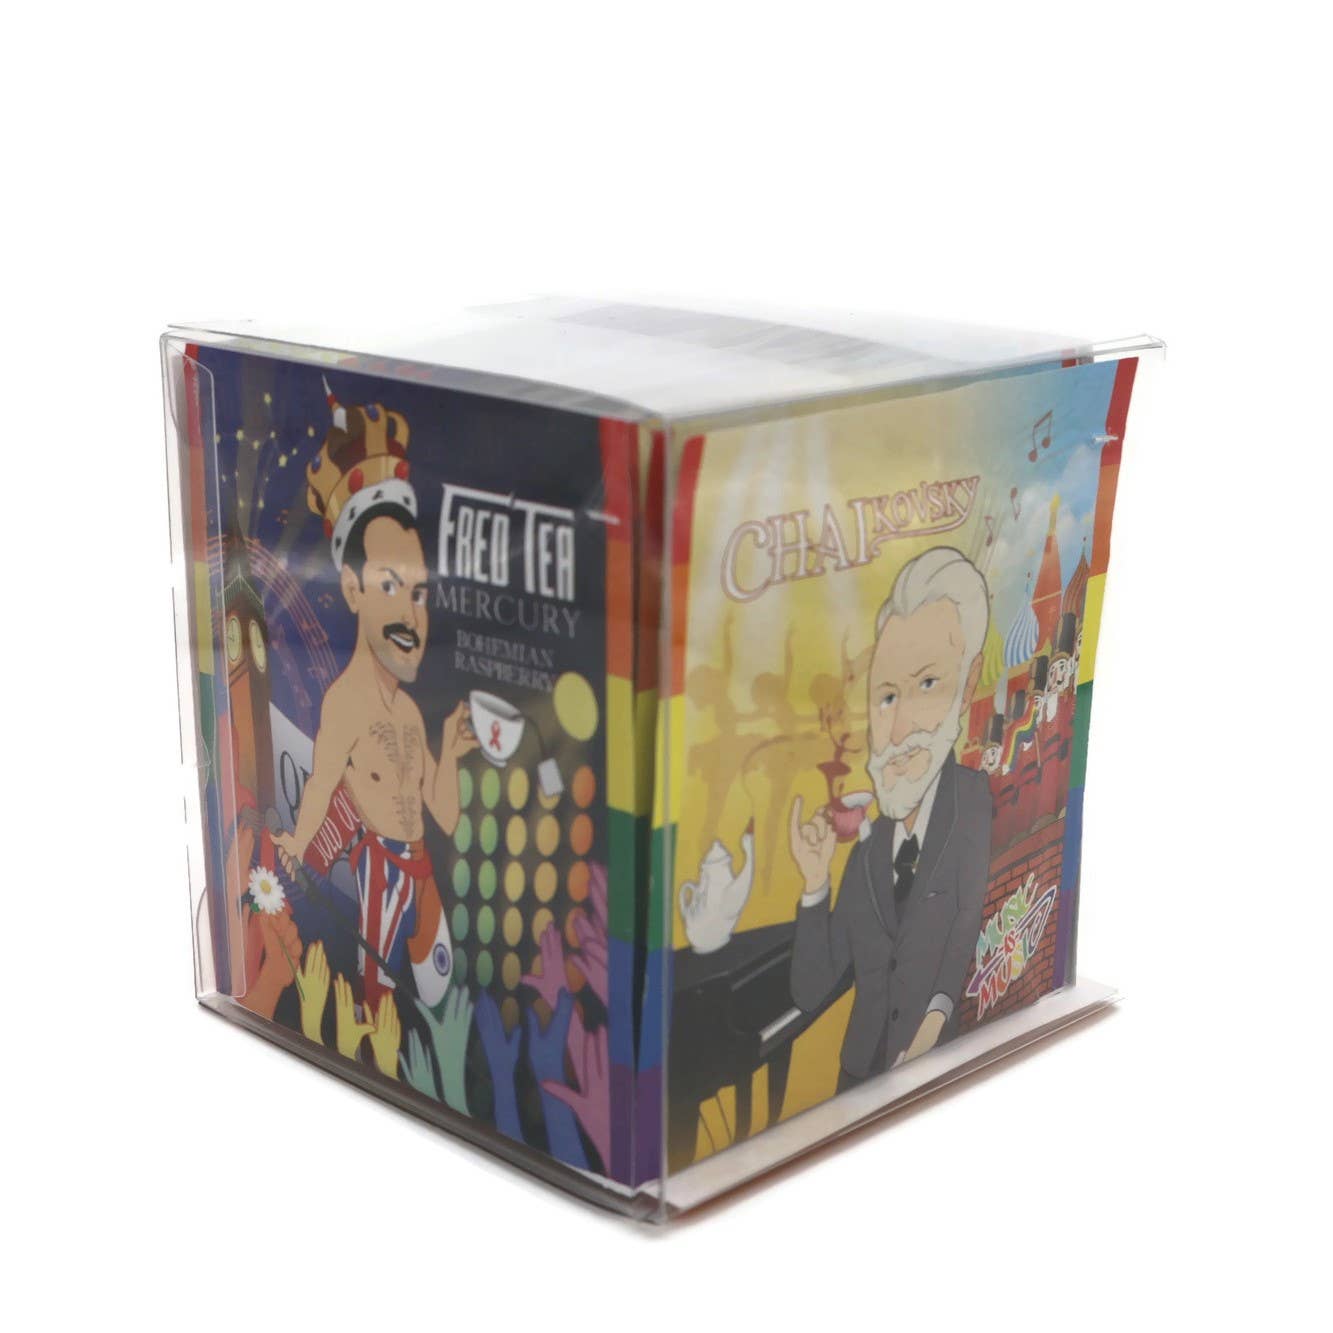 The TeaBook - CusTEAmized Tea Cube for your organization.